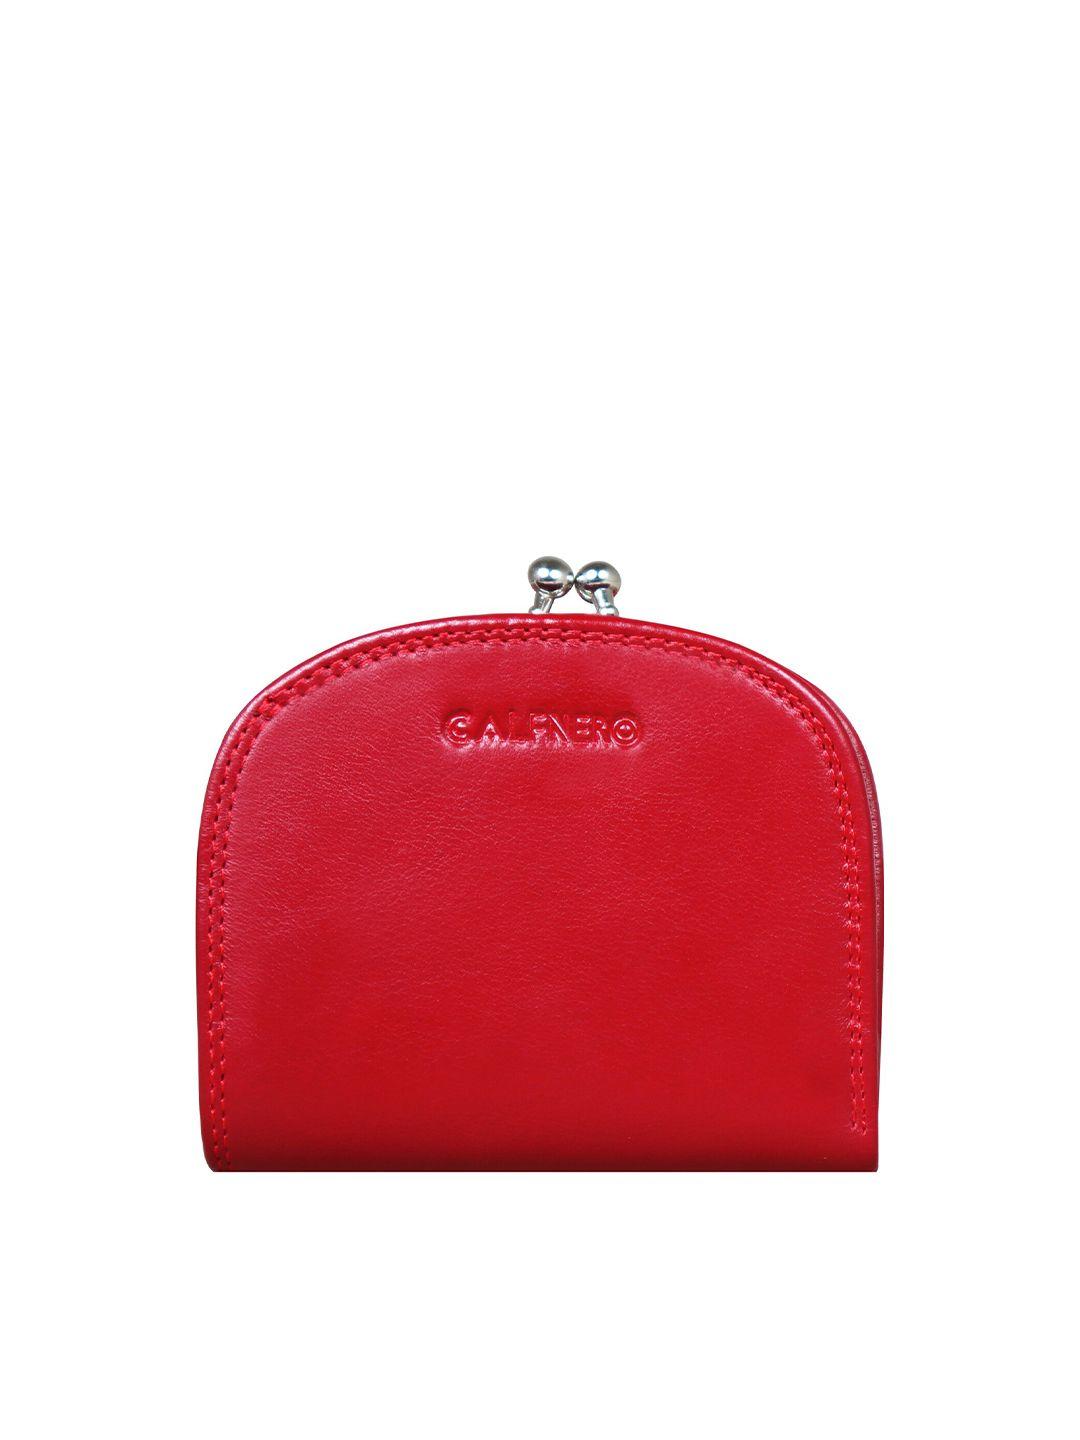 calfnero genuine leather purse clutch